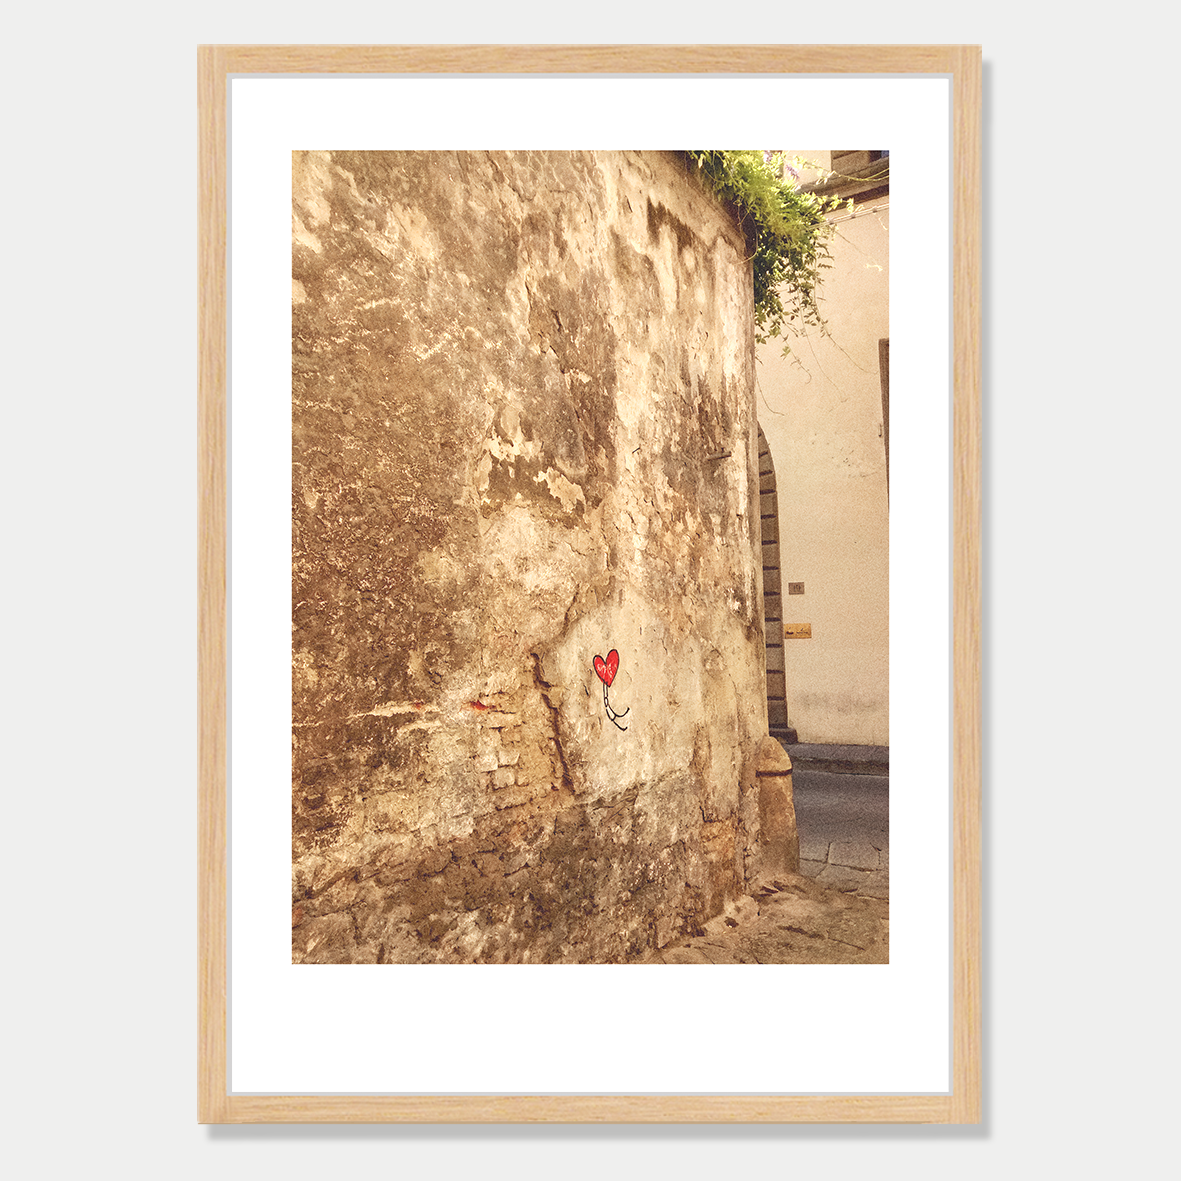 Firenze Back Street Heart Graffiti Still Life Photographic Art Print in a Skinny Raw Frame